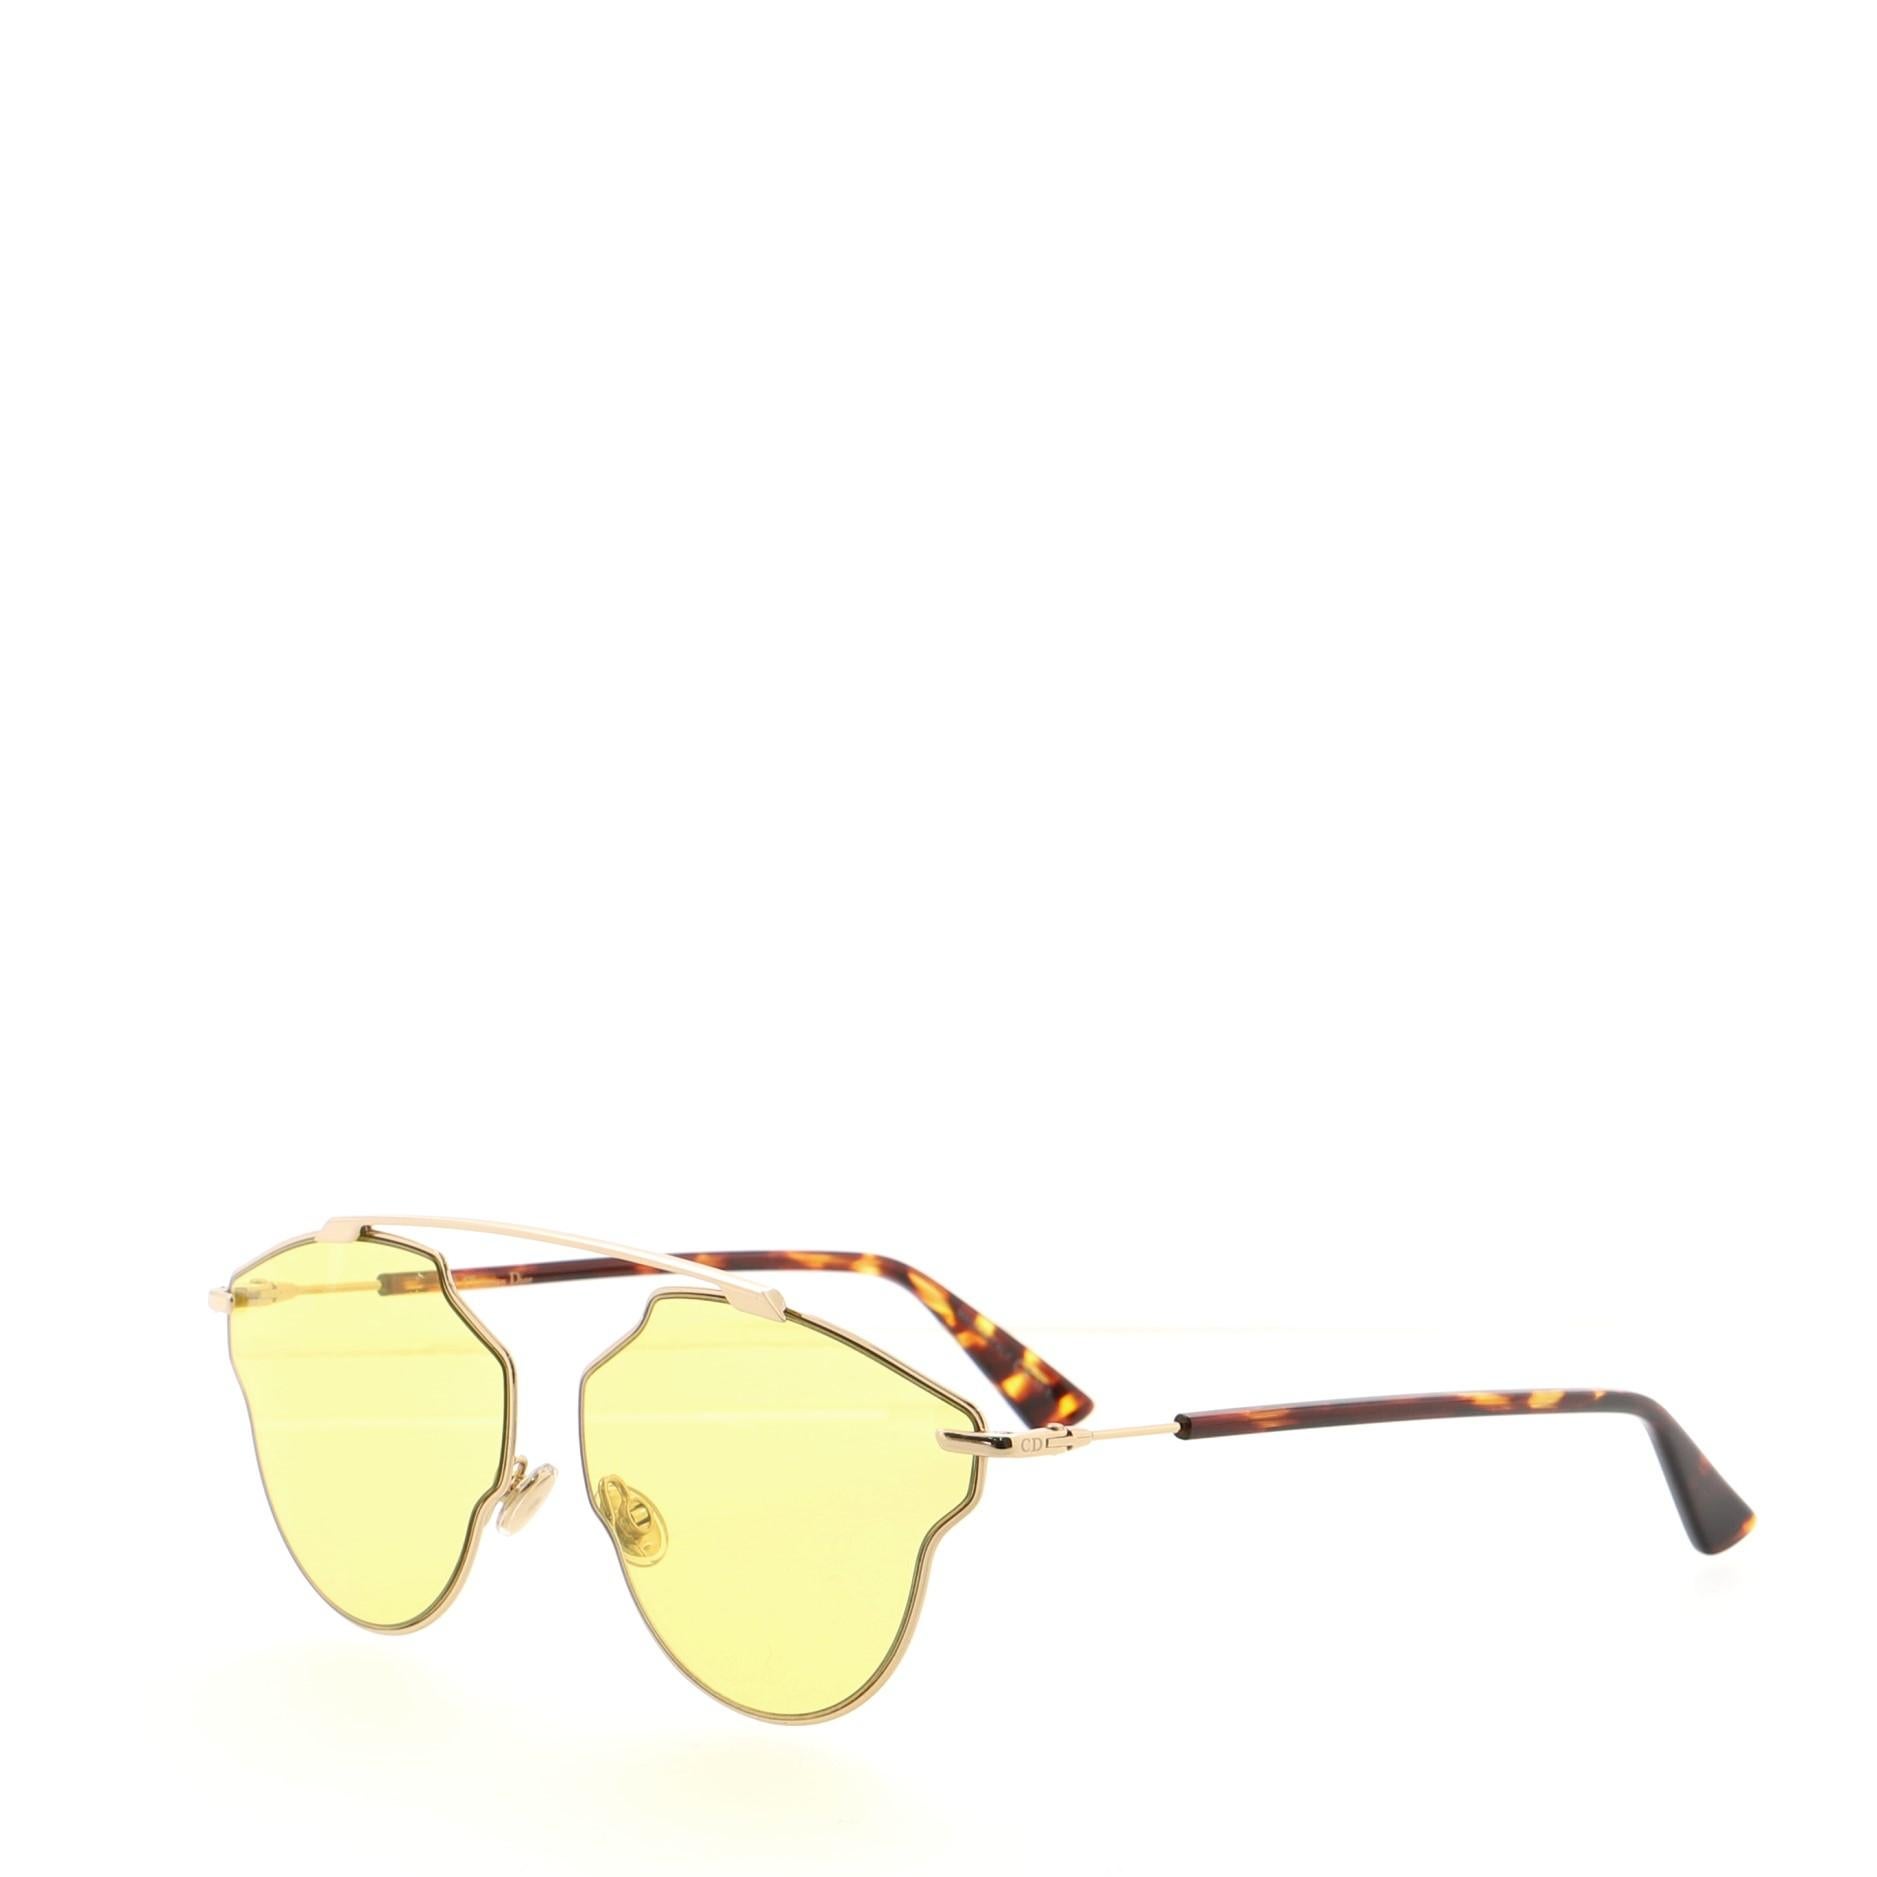 Black Christian Dior So Real Pop Aviator Sunglasses Tortoise Acetate and Metal Brown